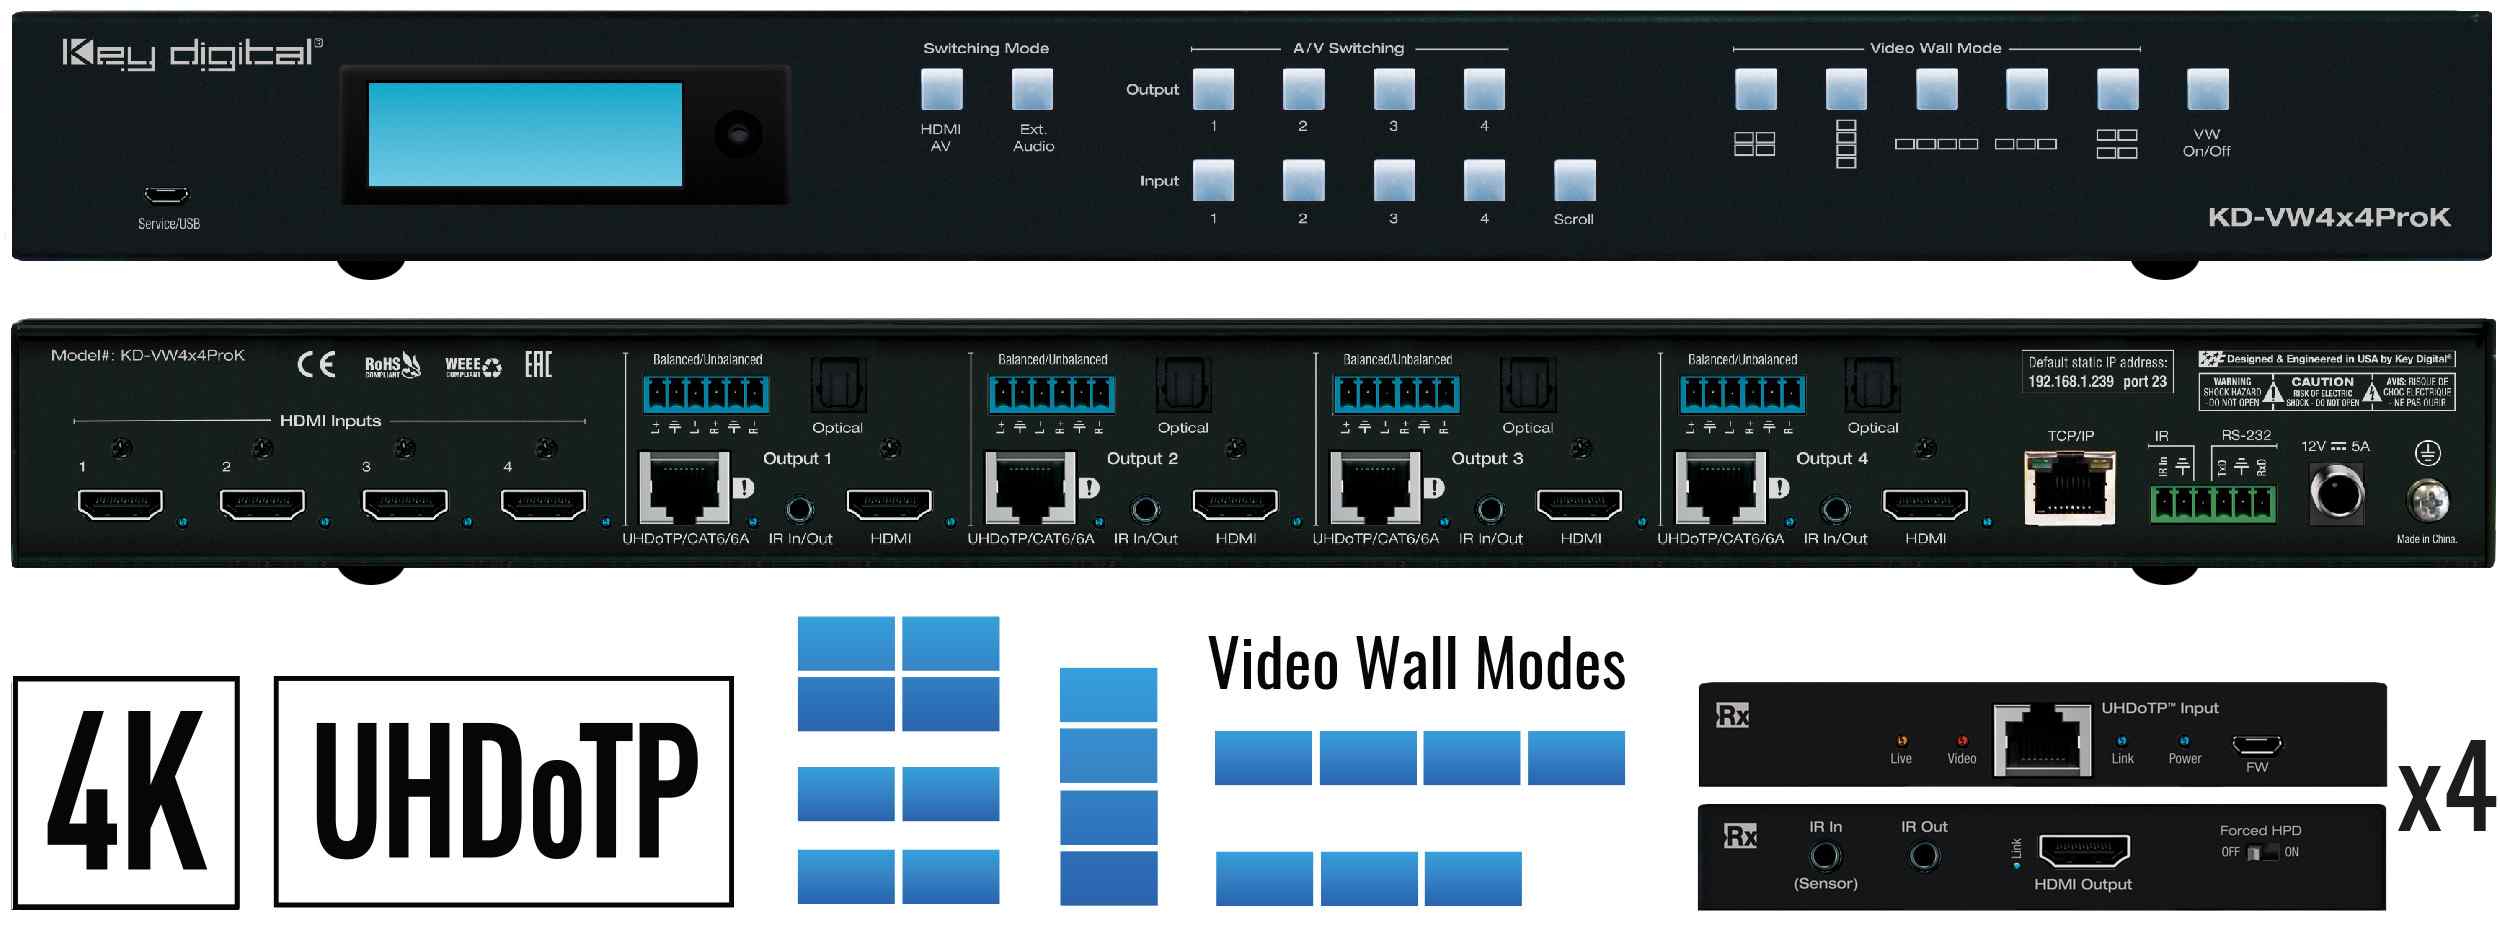 Key Digital video matrix switcher front and rear